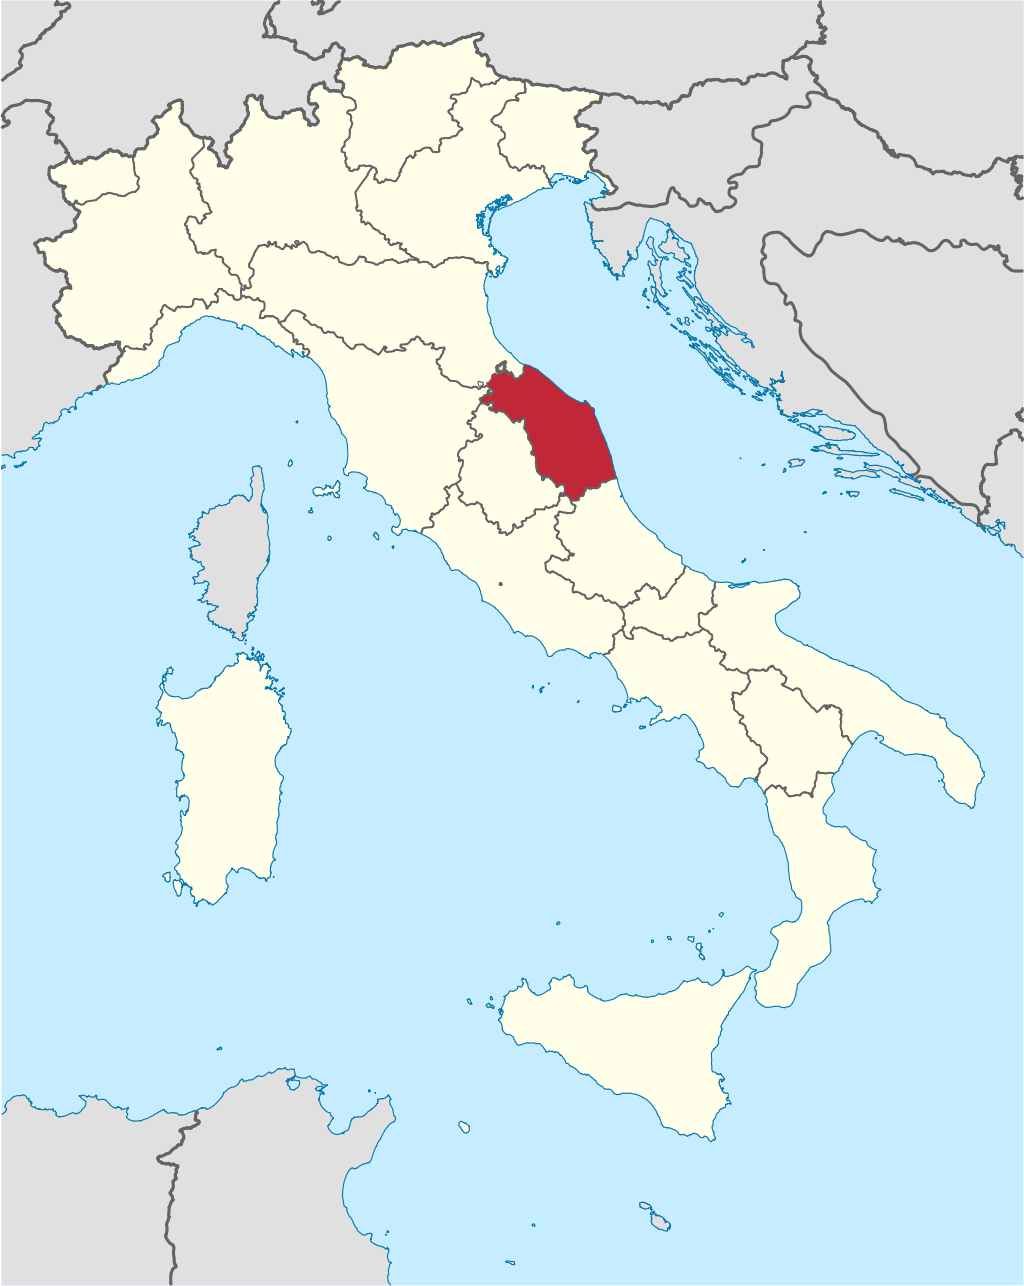 Appartement Giulia Urbex location or around the region Marche (Macerata), Italy